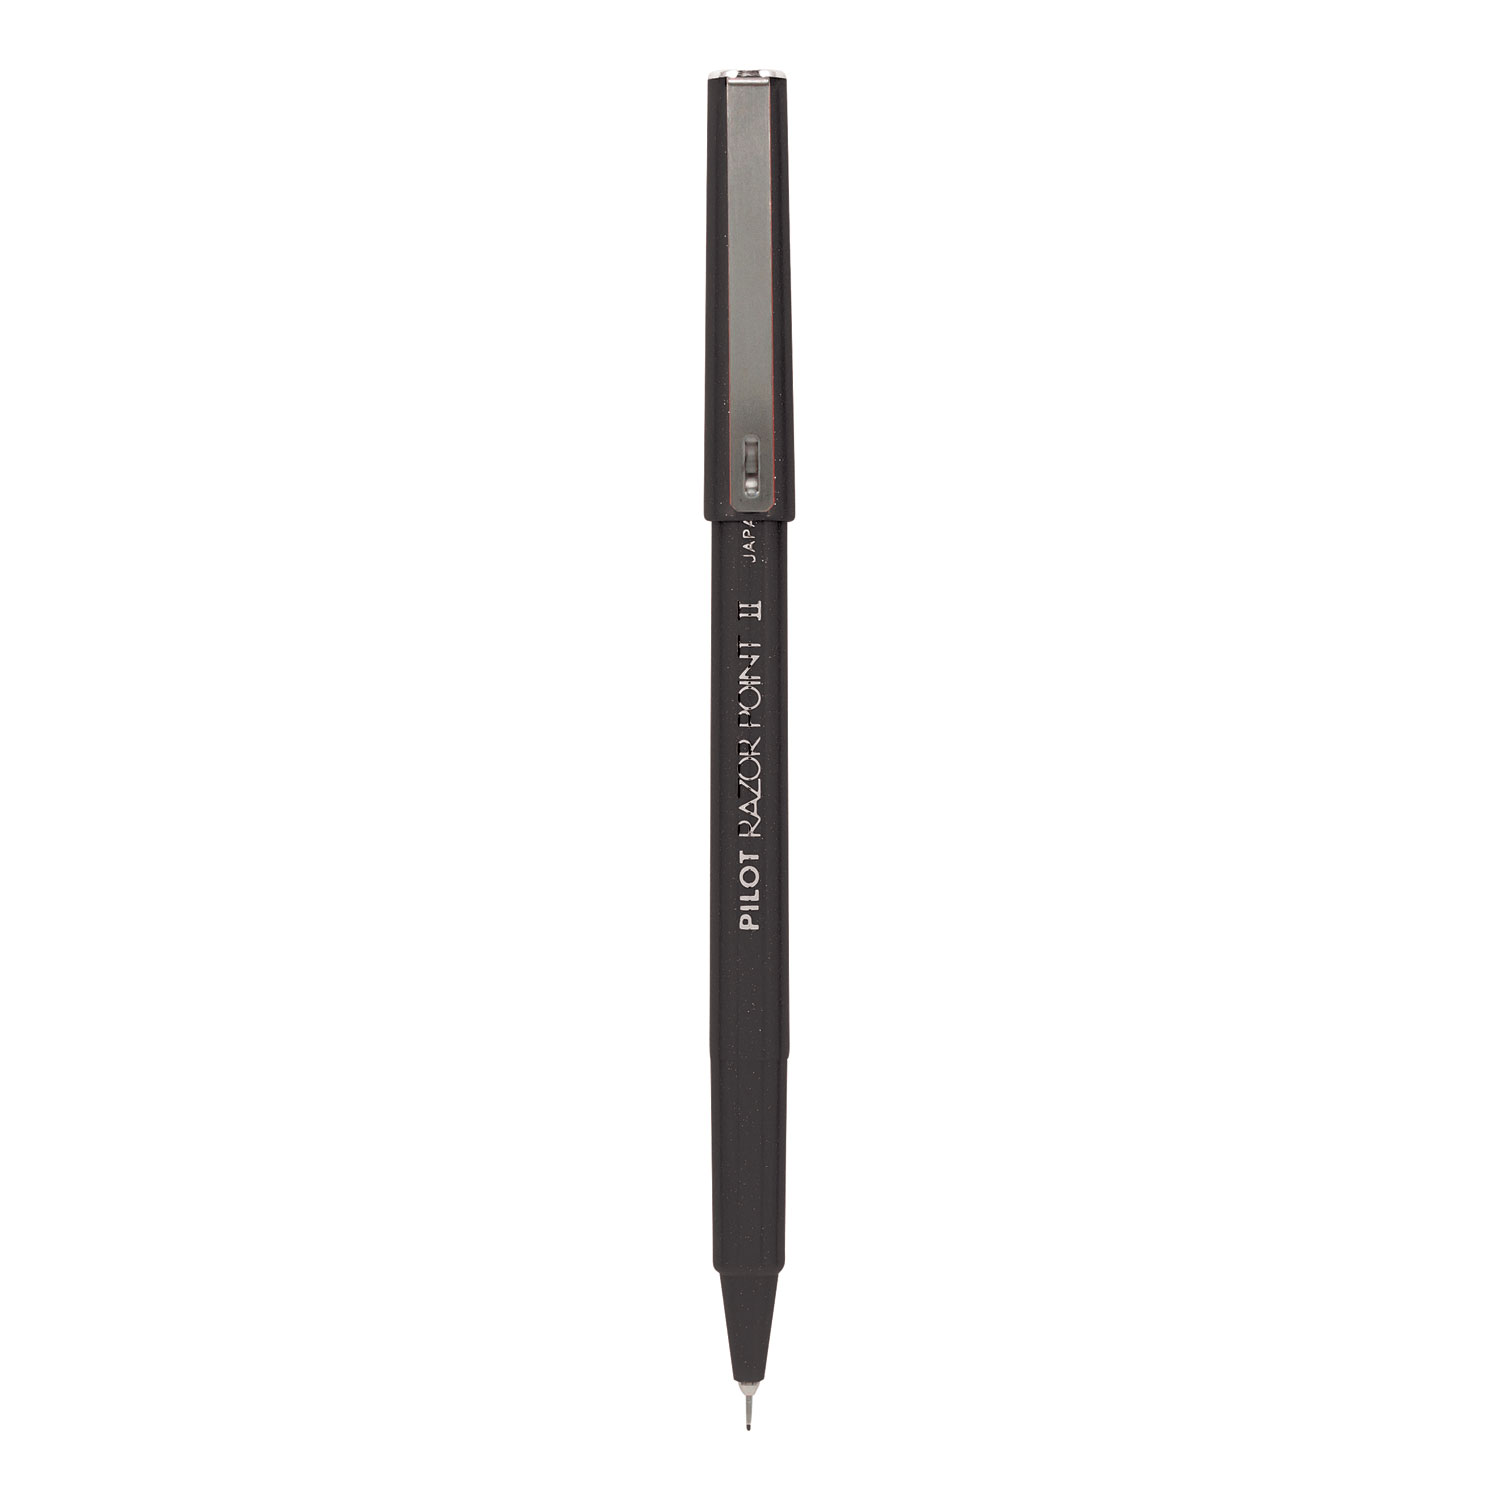 PILOT Razor Point Fine Line Marker Pens, Ultra-Fine Point (0.3mm